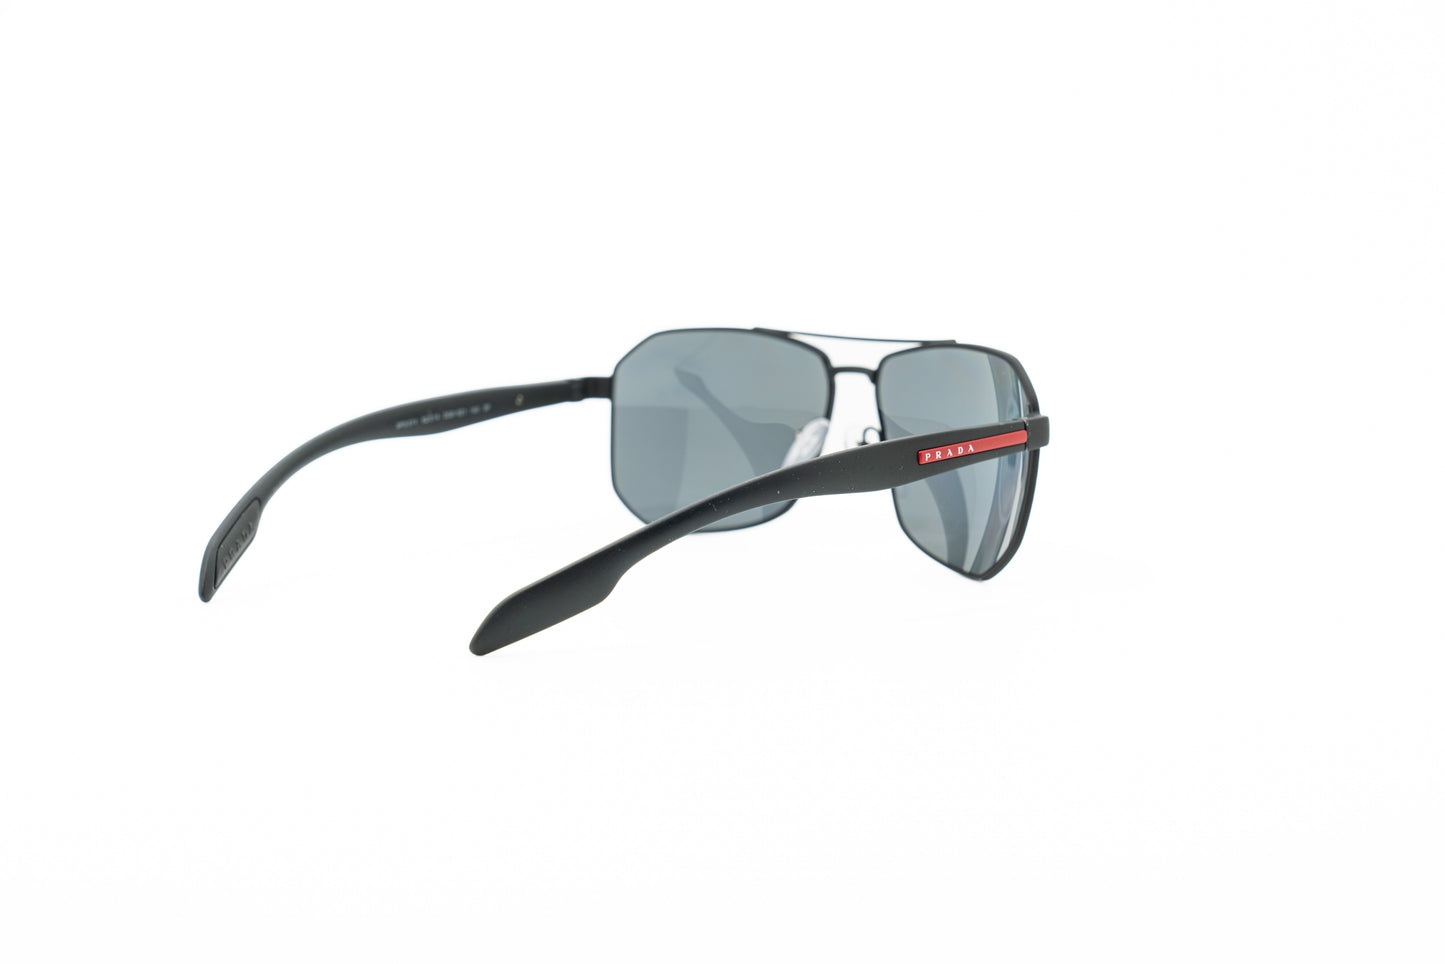 Prada DG0-5Z1 Stainless Steel Sunglasses in Black